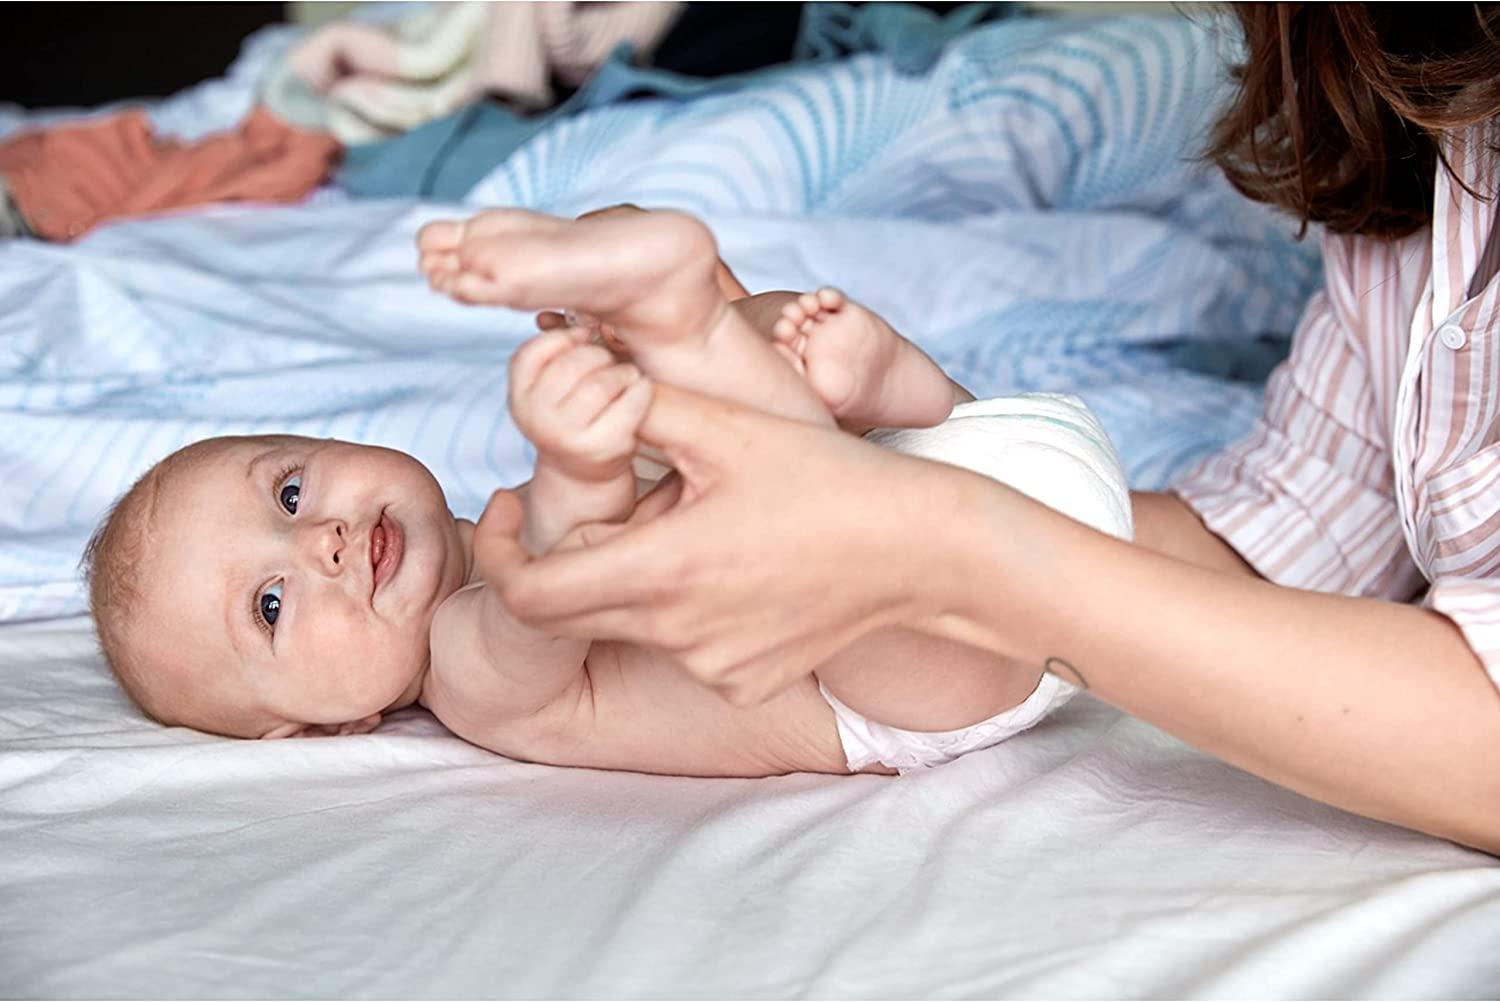 JOHNSON'S® Baby Arabia  Baby Care for Newborns, Baby, Toddlers & Kids